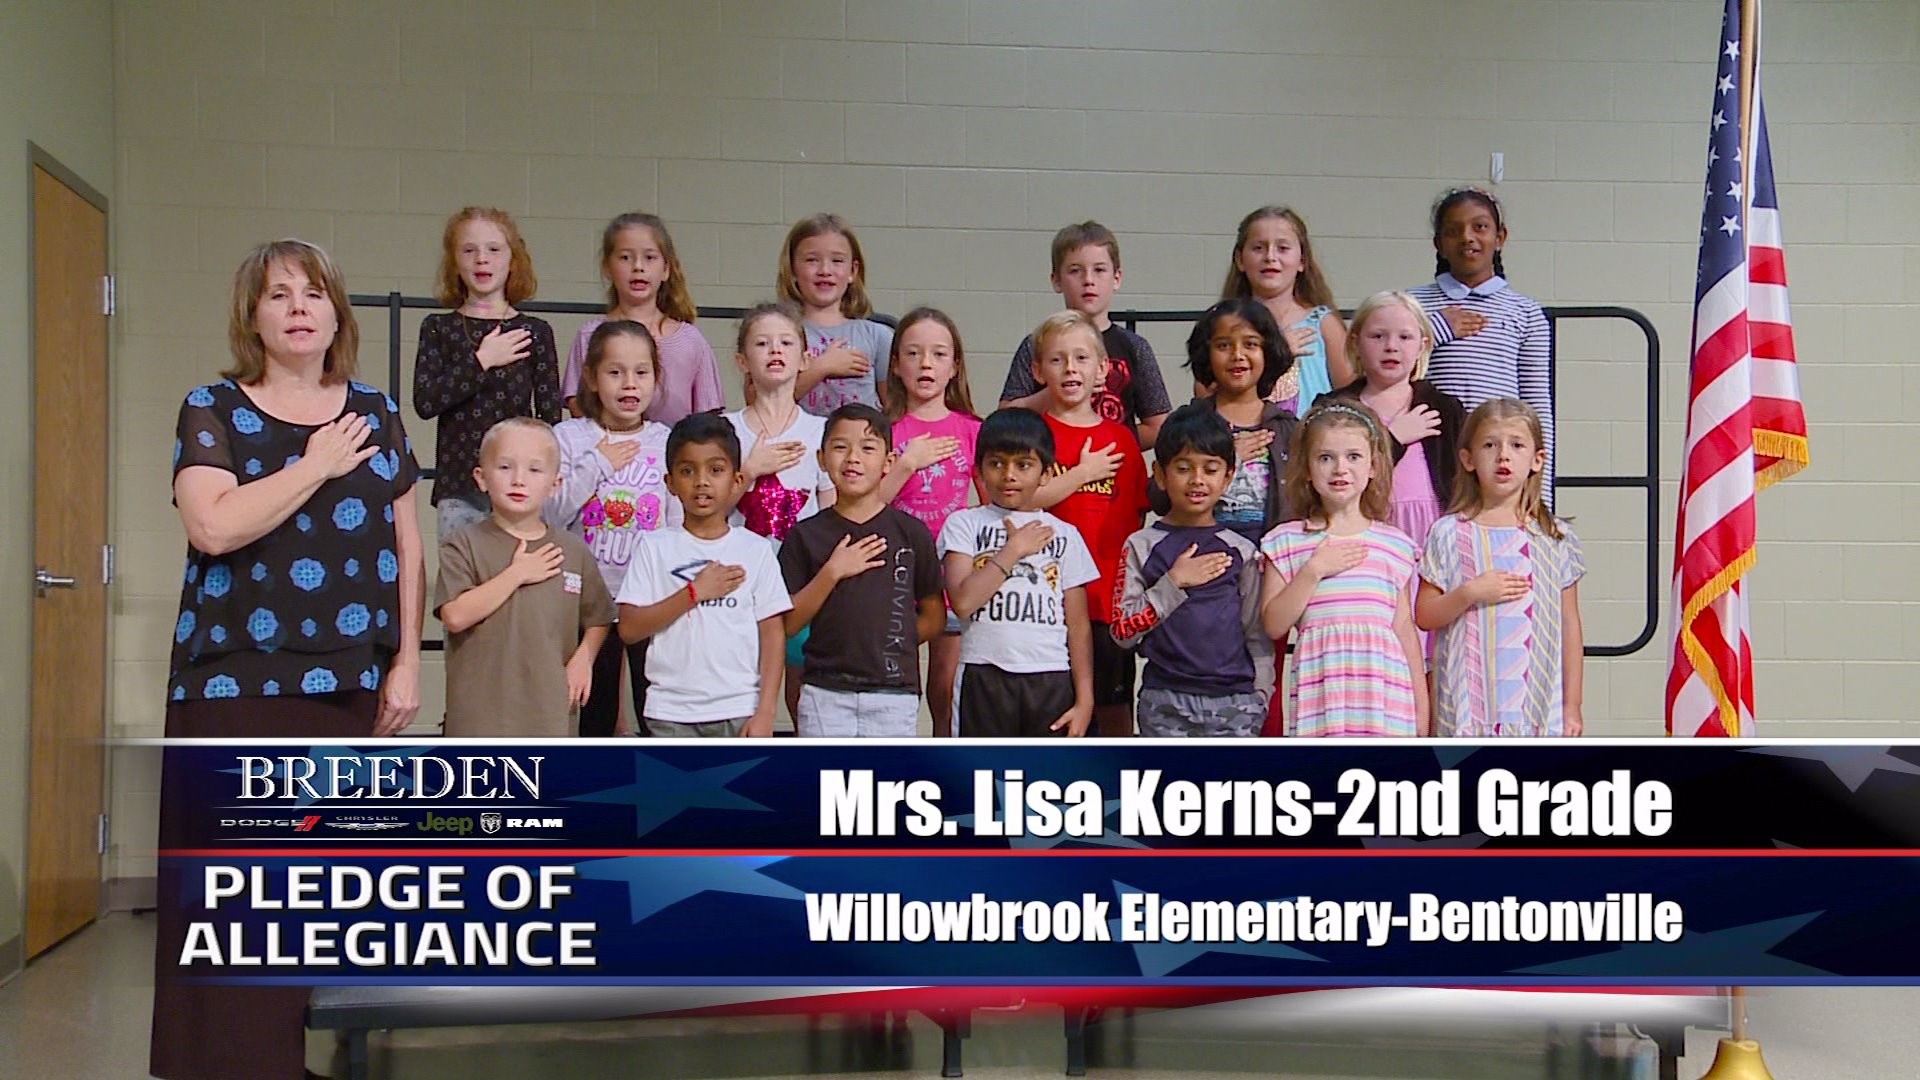 Mrs. Lisa Kerns  2nd Grade Willowbrook Elementary, Bentonville